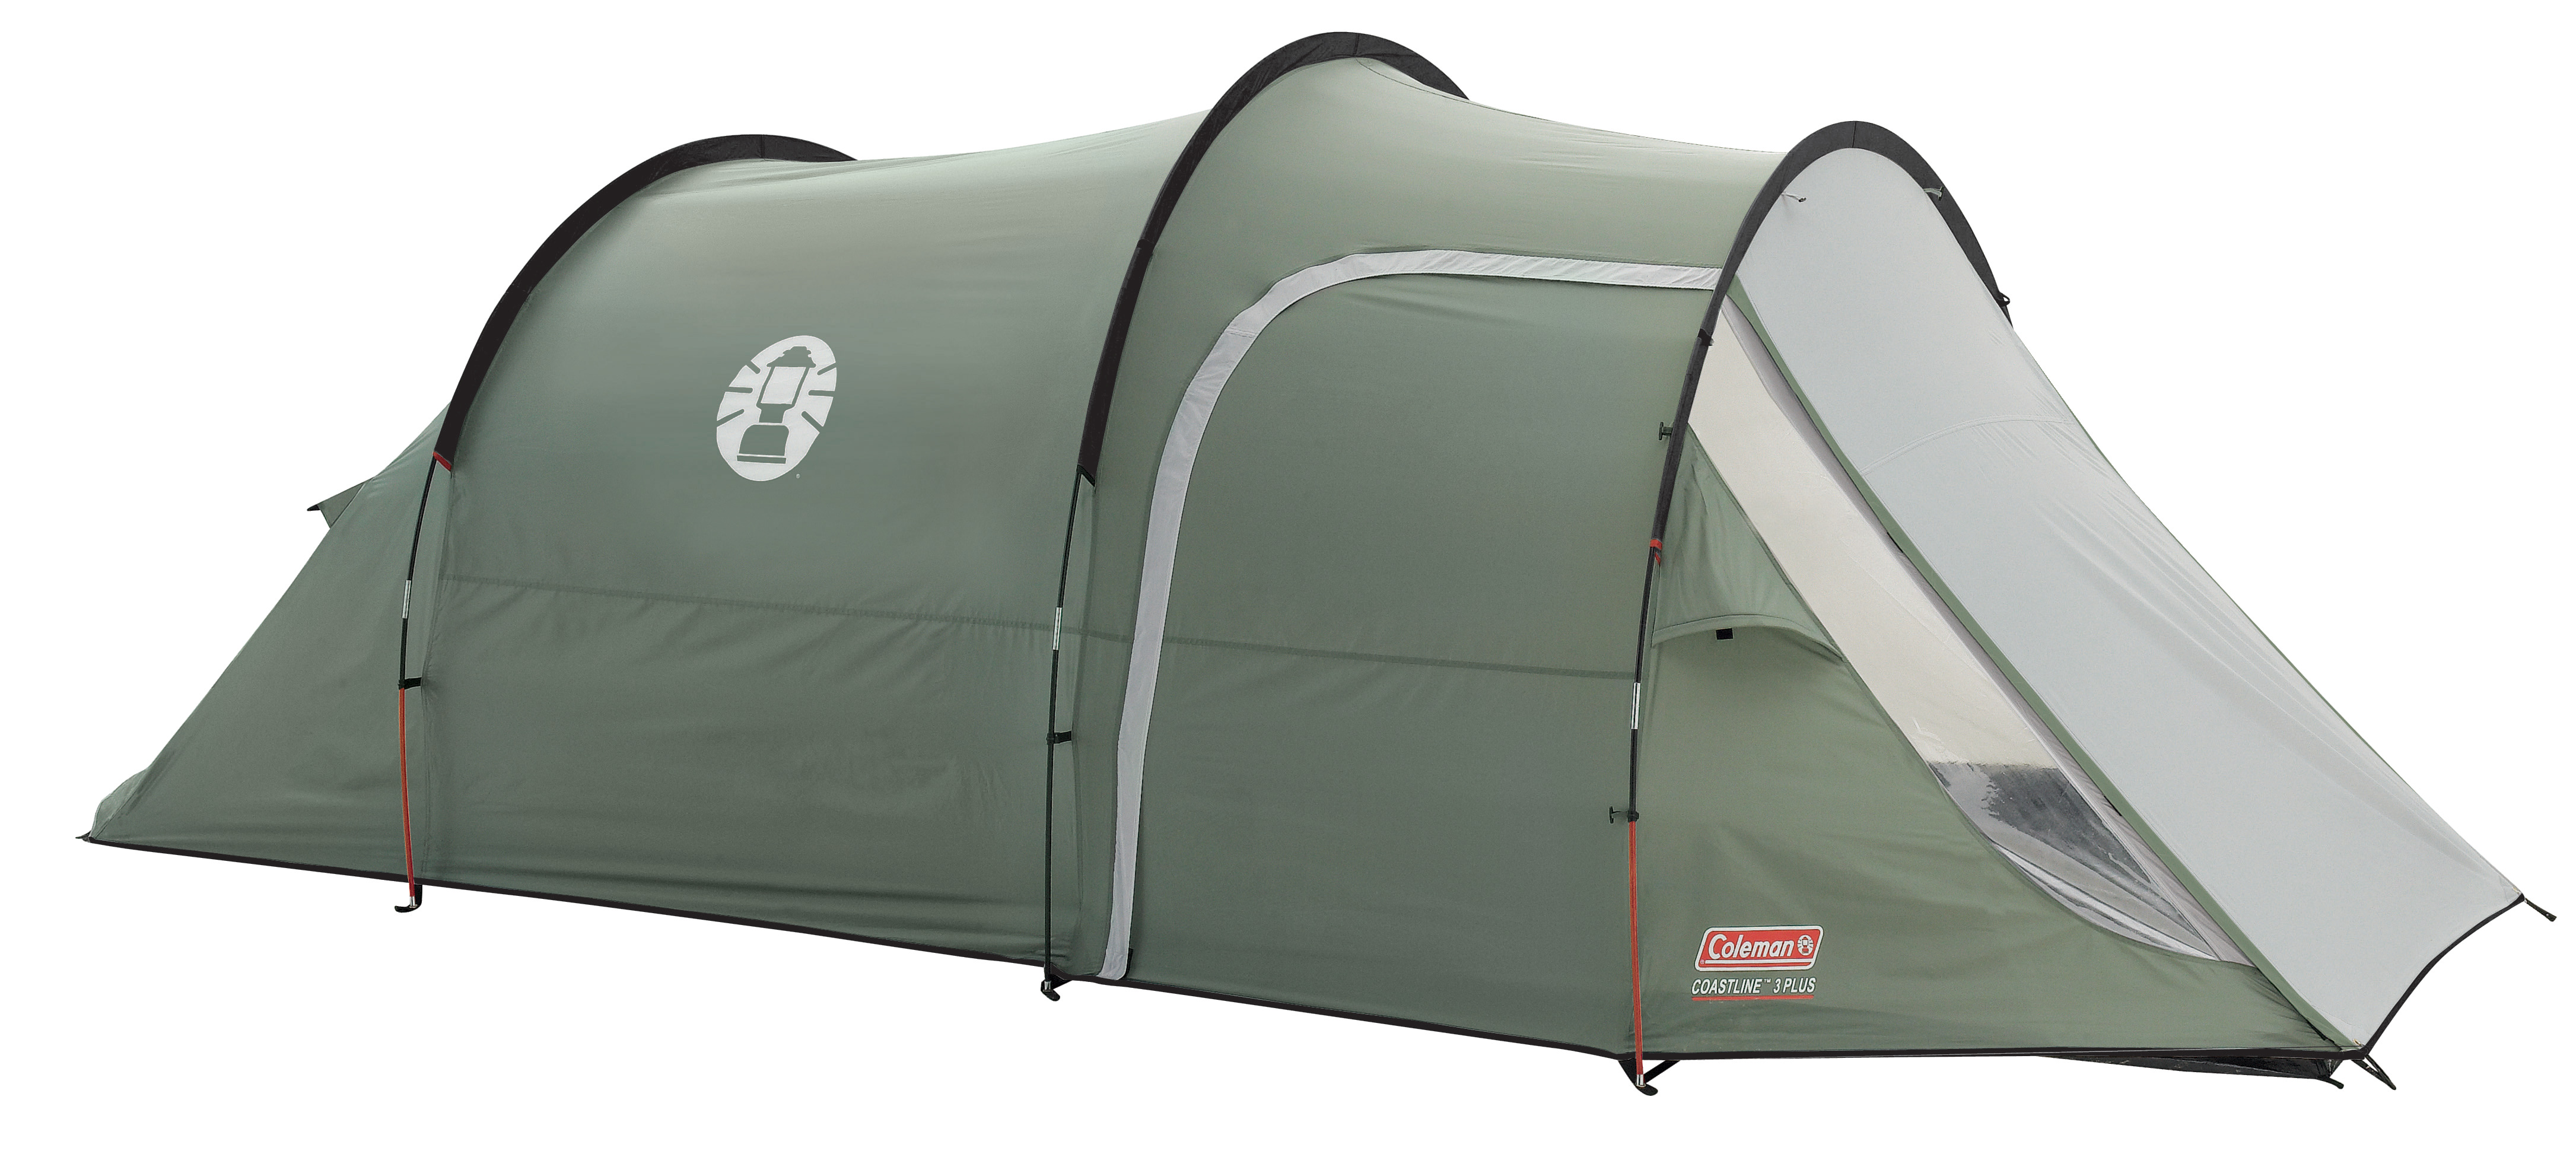 Coastline™ 3 Plus Tent | Coleman UK